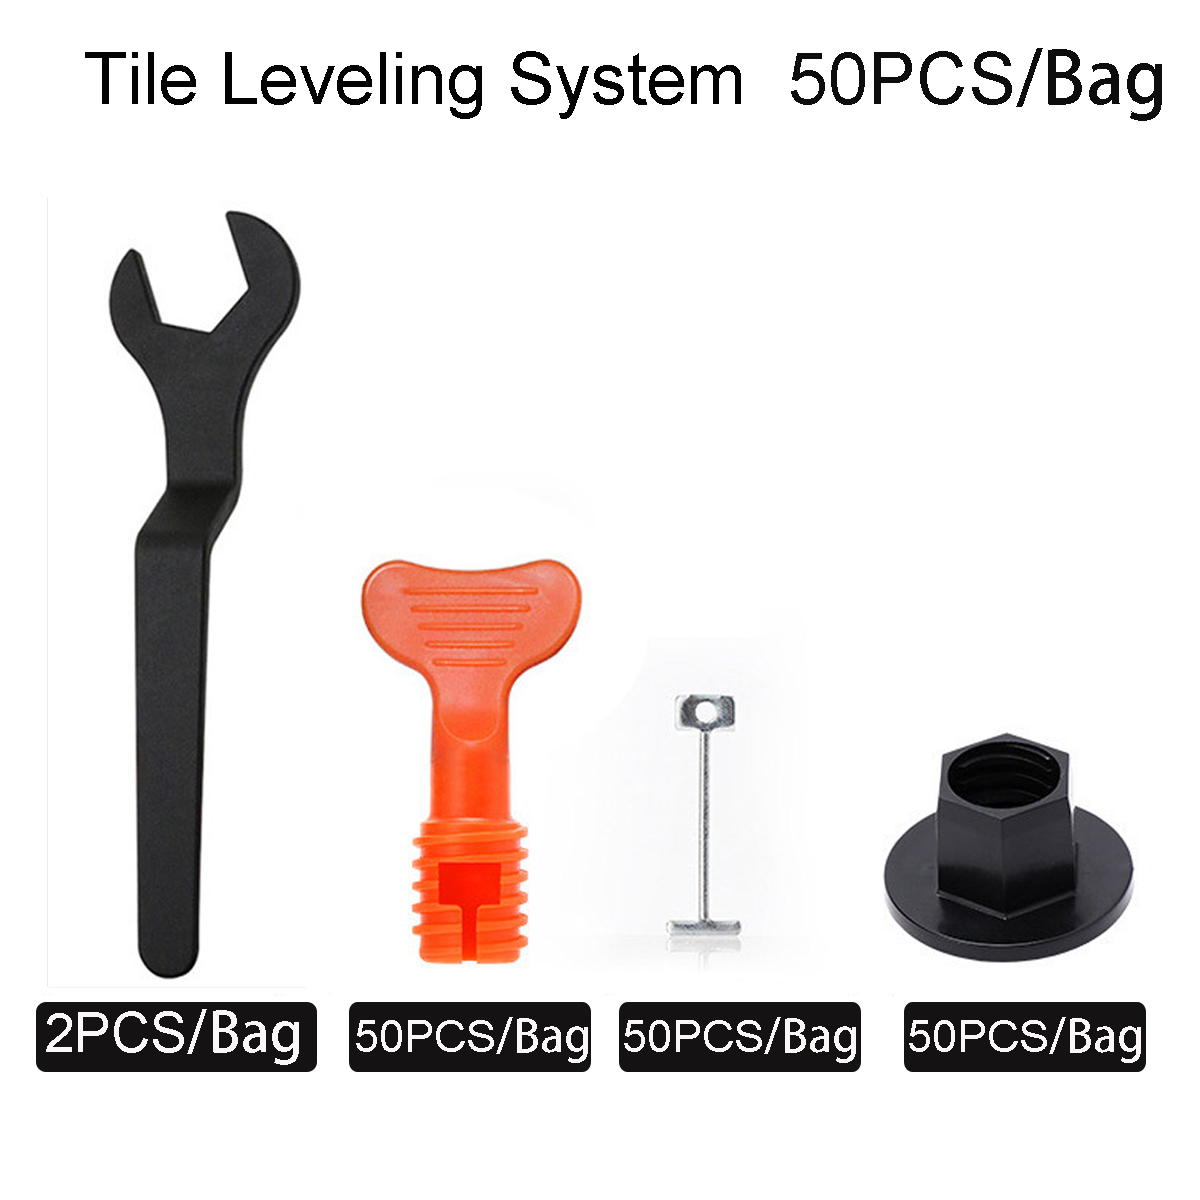 Tile-Leveling-System-Tile-Spacer-Wall-Leveler-Wedges-Spacers-Flooring-Wall-Tile-Carrelage-Leveling-S-1763520-2